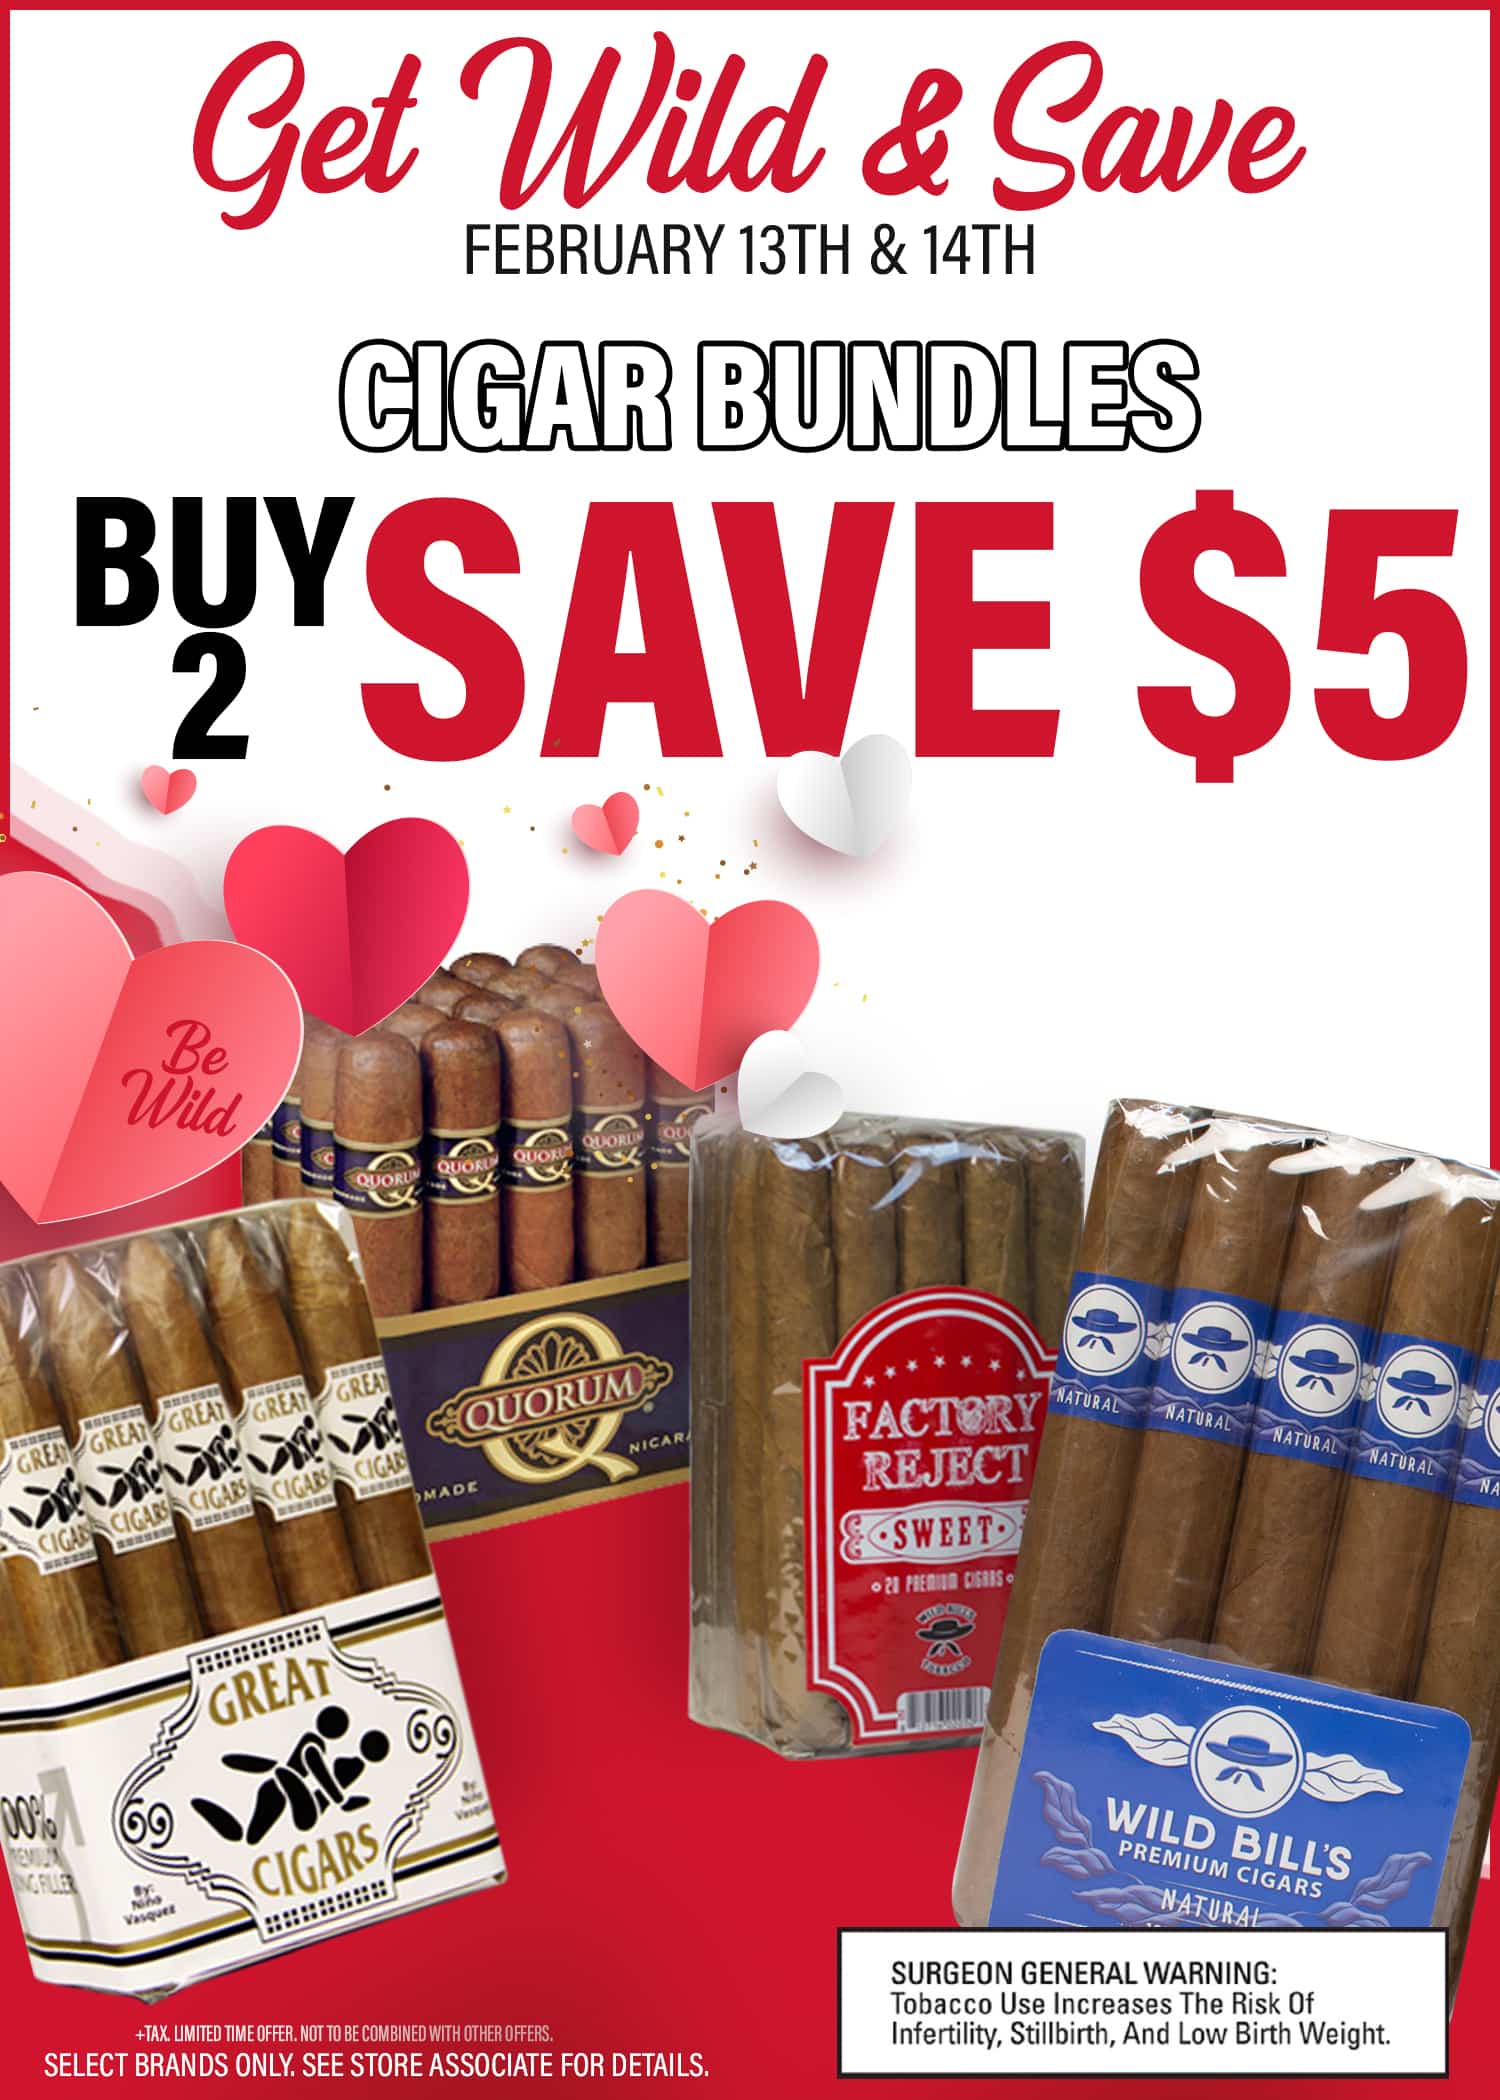 Get Wild & Save - Cigar Bundles - Buy 2 Save $5